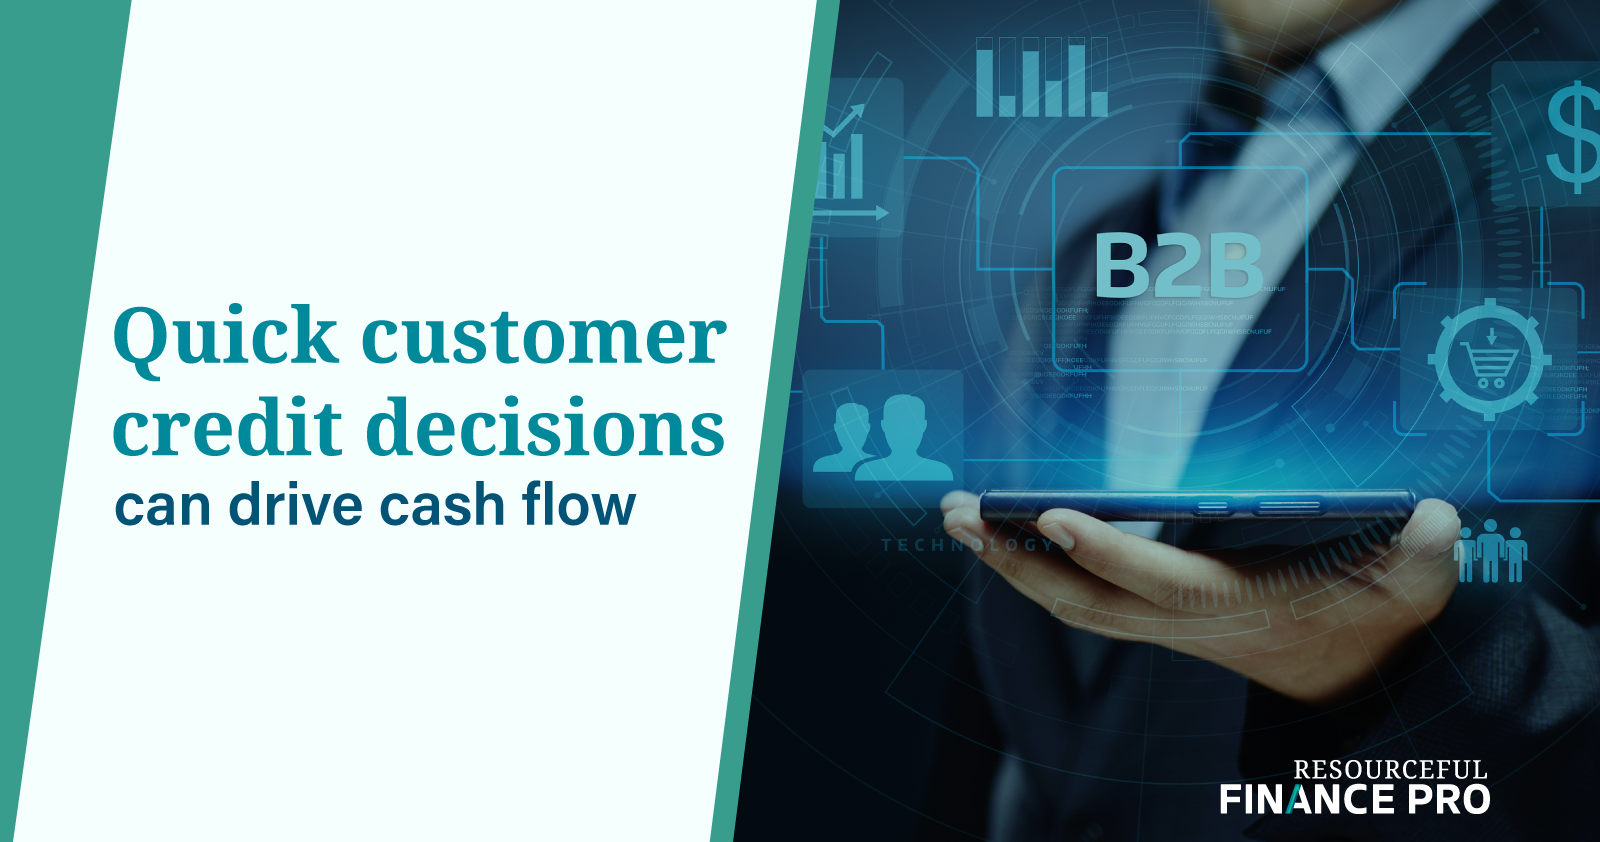 Quick customer credit decisions can drive cash flow